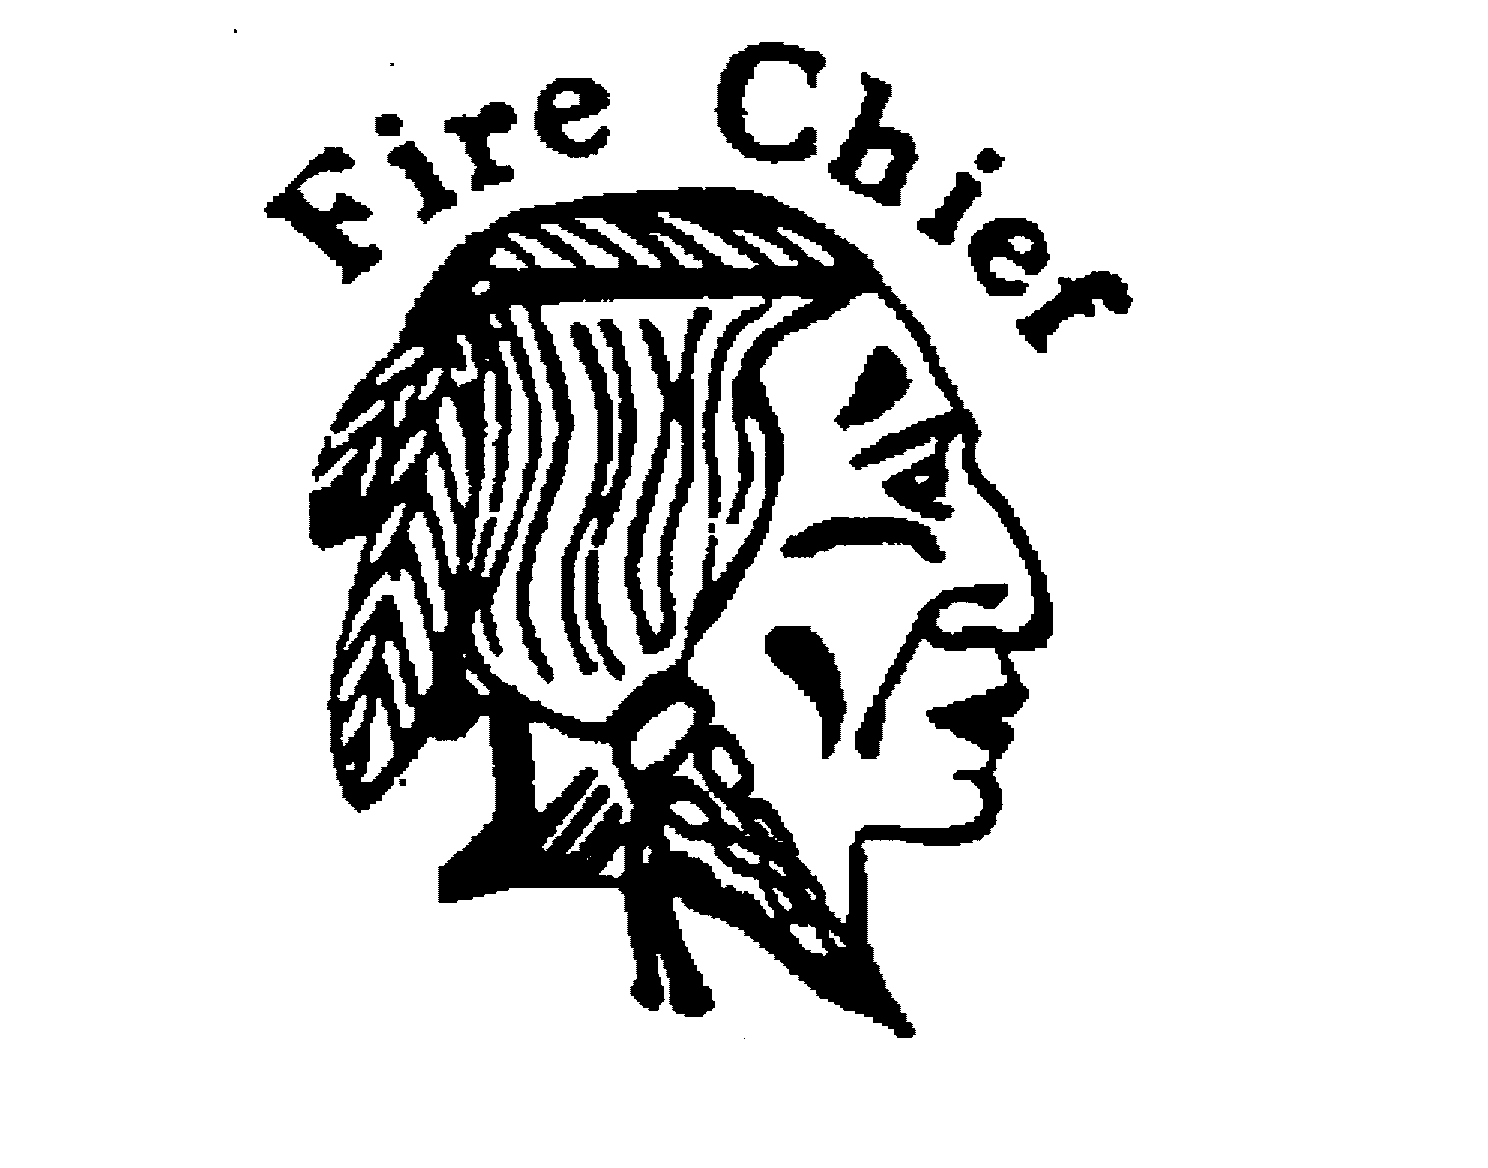 Trademark Logo FIRE CHIEF